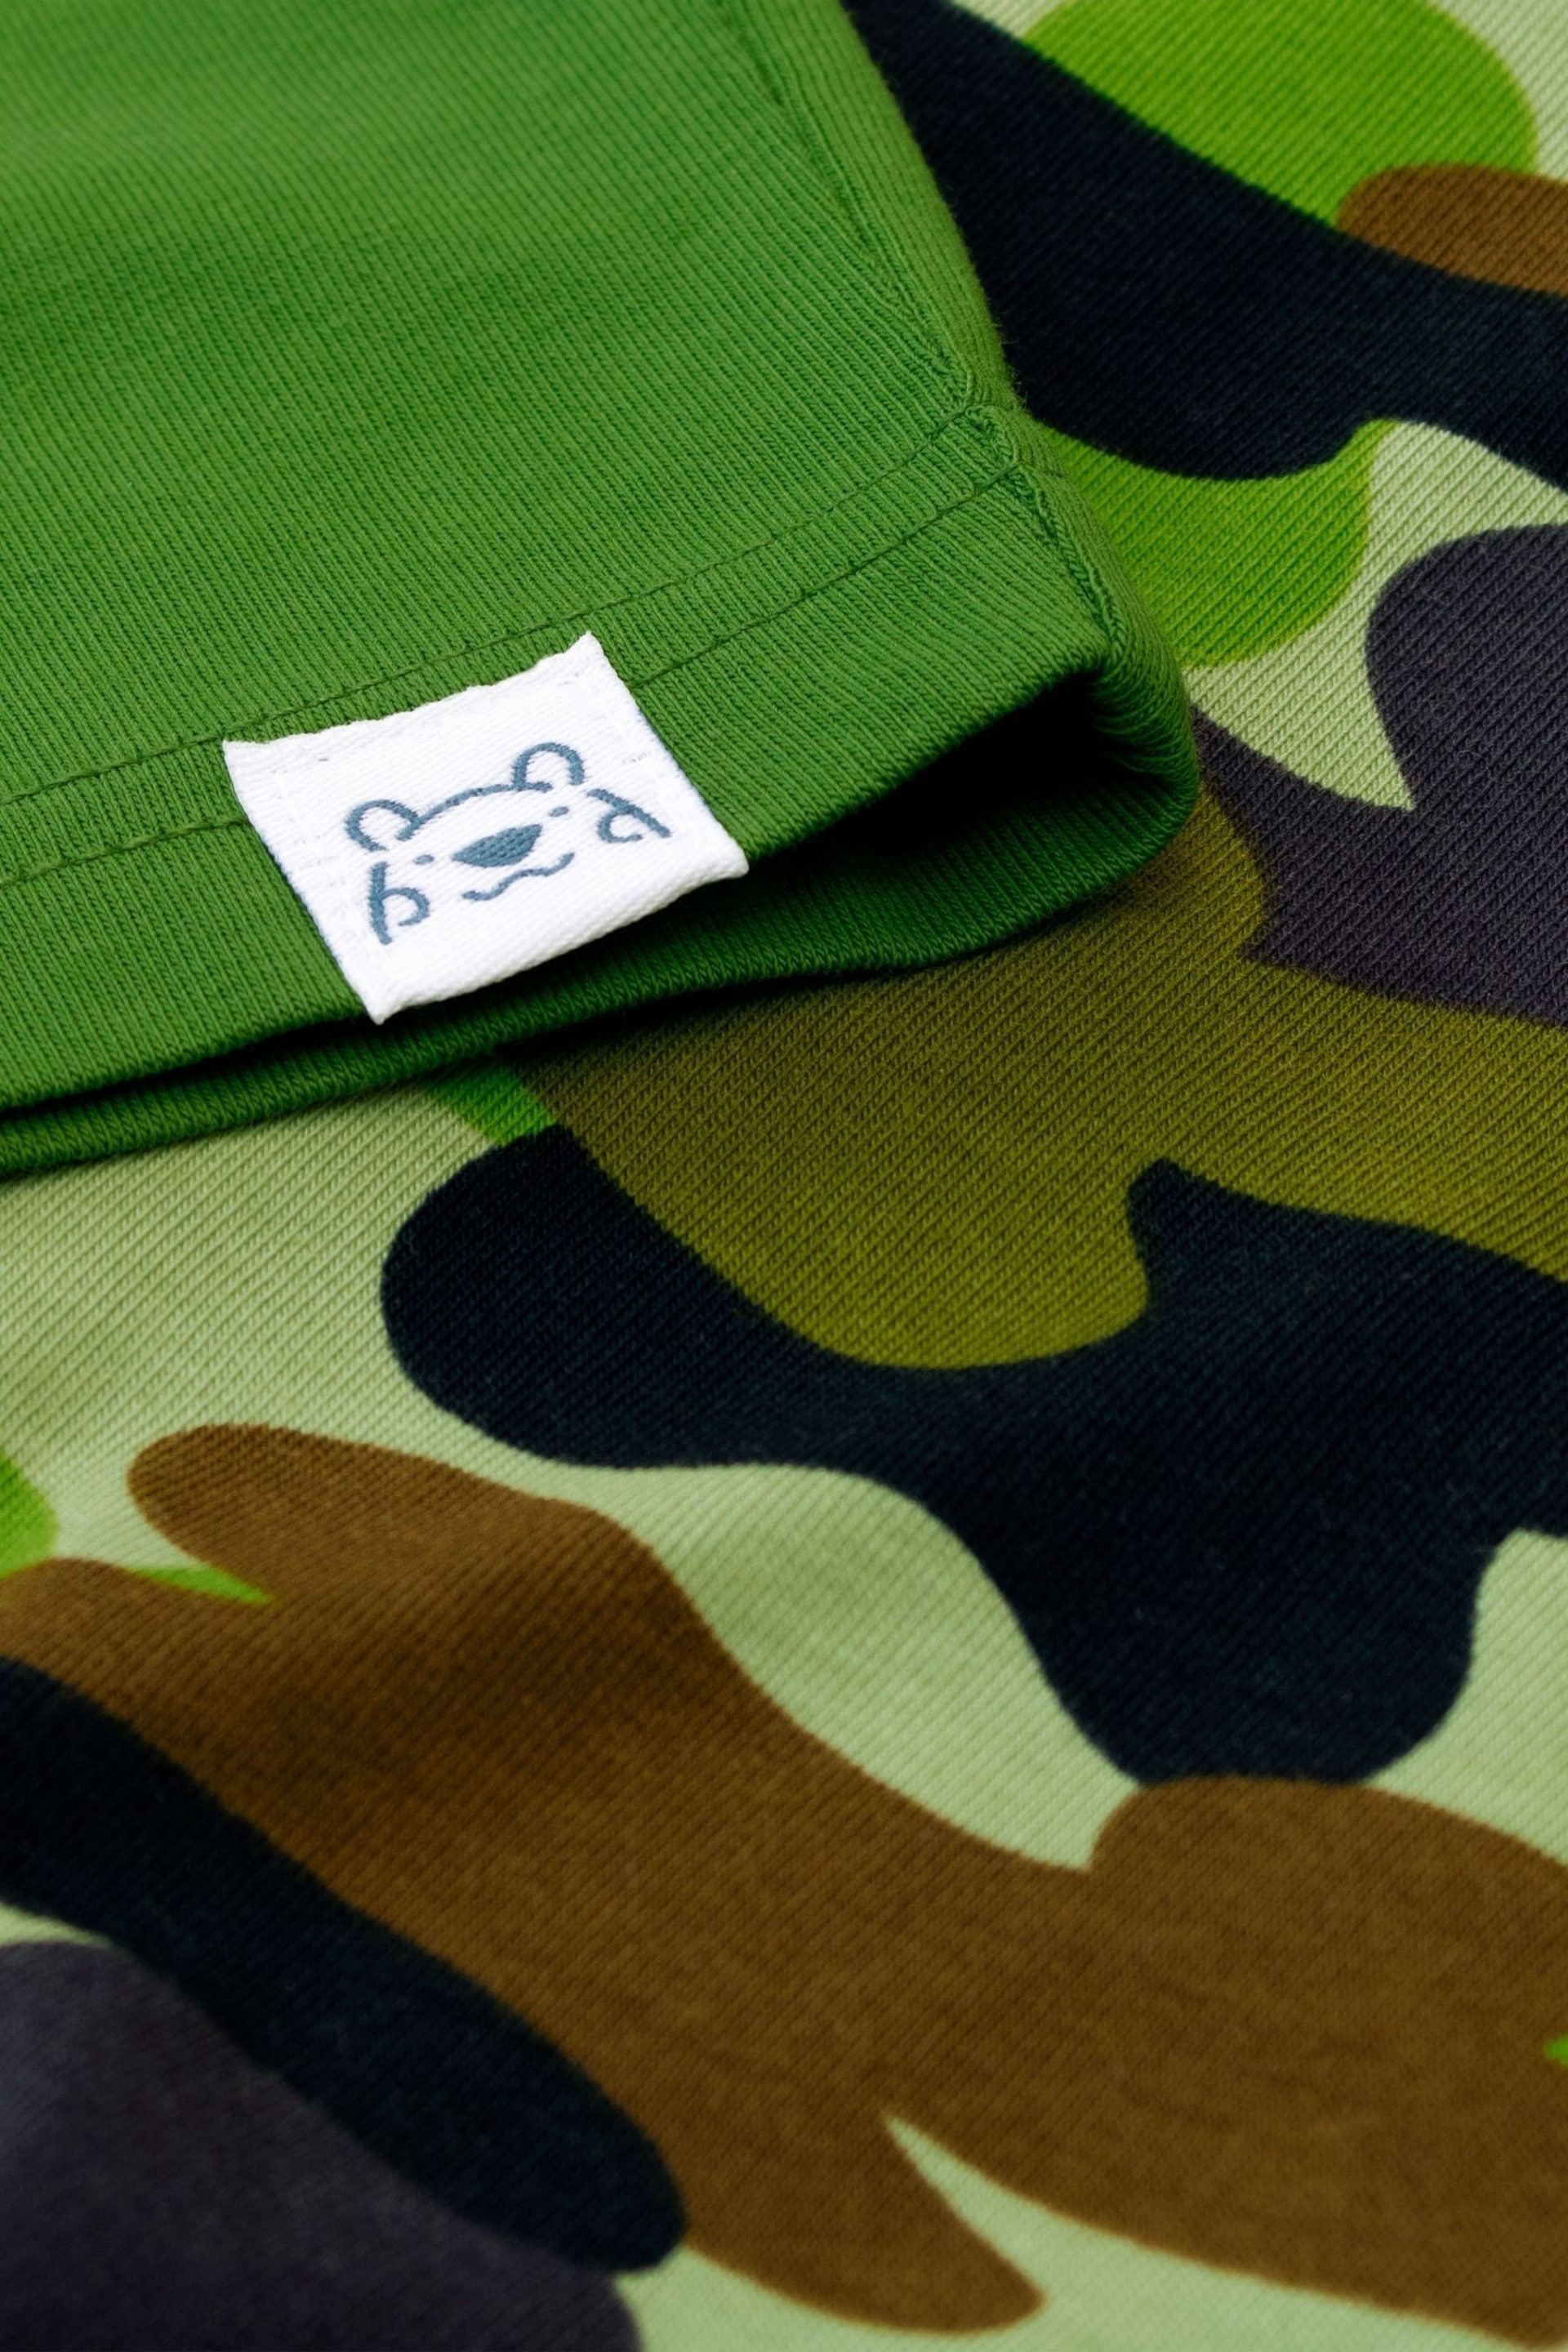 Harry Bear Green Camouflage Pyjamas - Snuggle Fit - Image 5 of 5